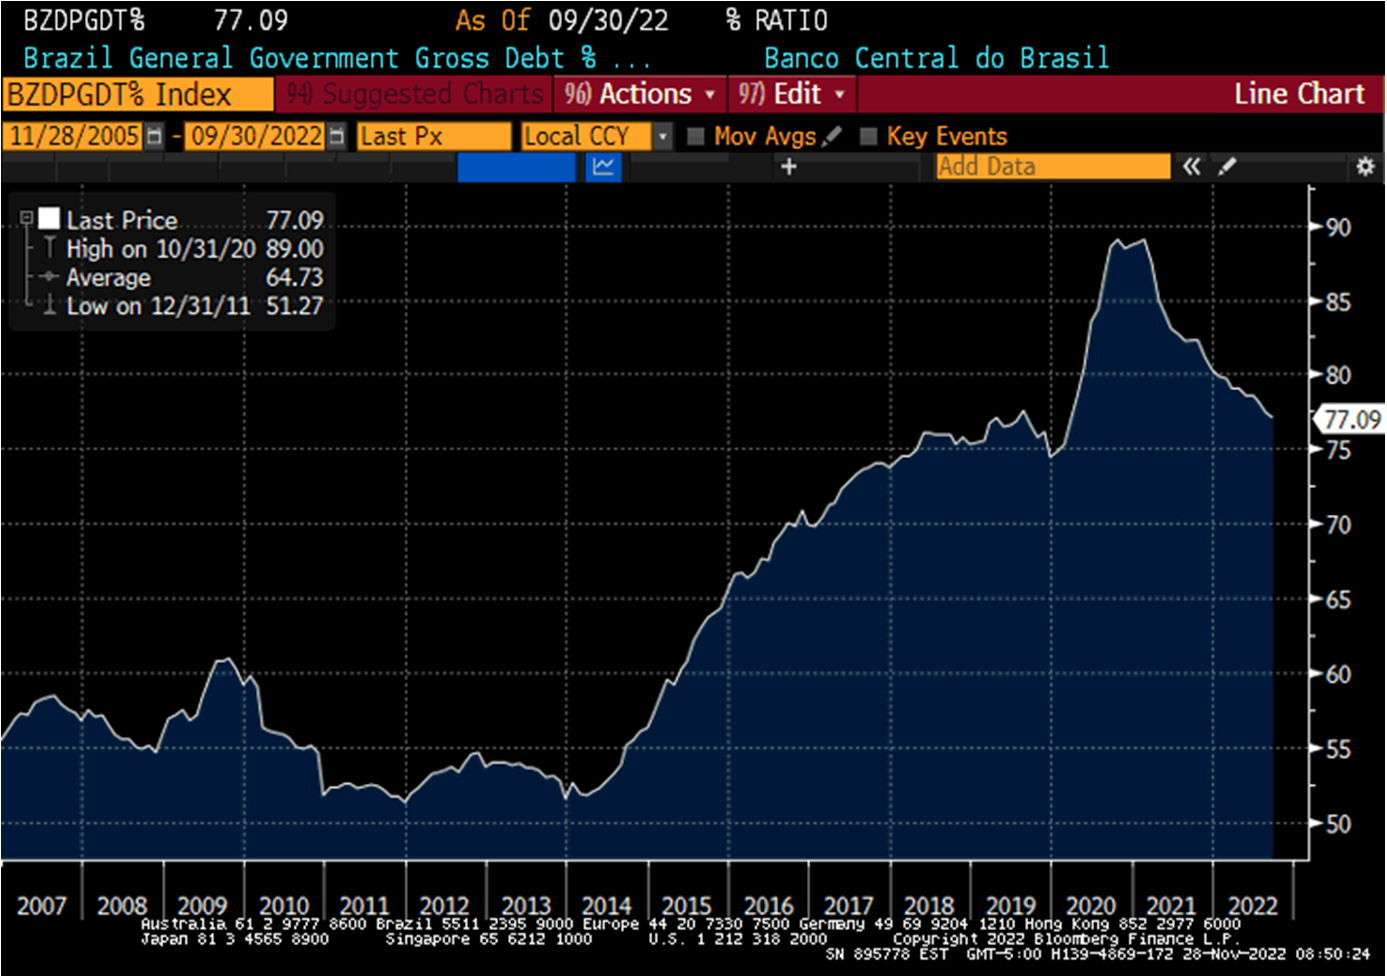 Chart at a Glance: Brazil Debt/GDP Ratio - Lower But Still Very High